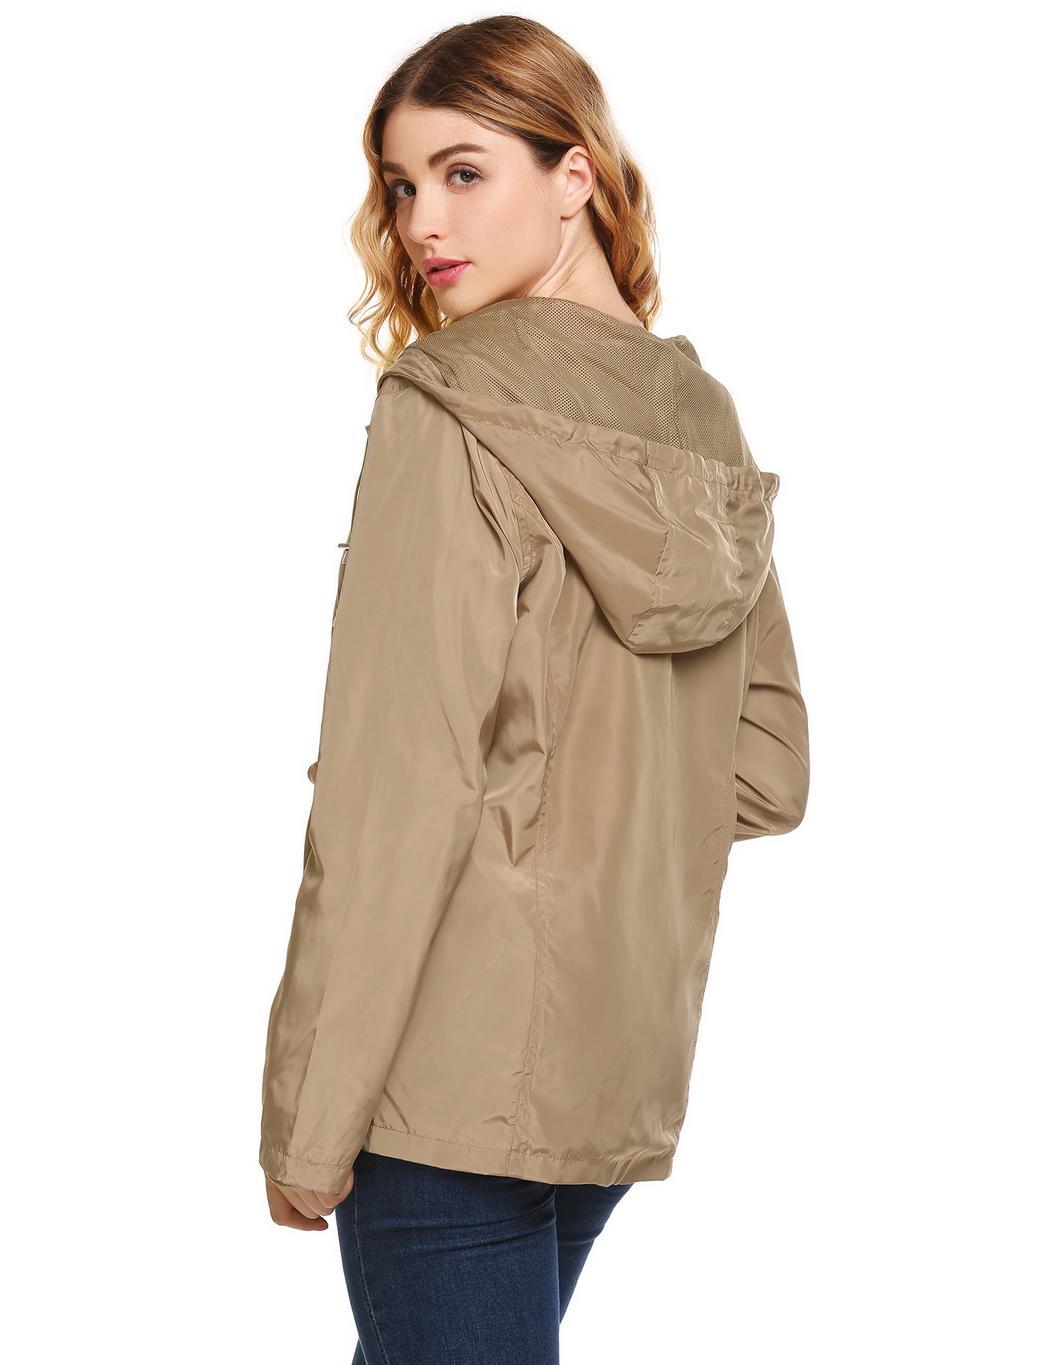 New Women Casual Weatherproof Long Sleeve Solid Coat Rain Jacket OK | eBay